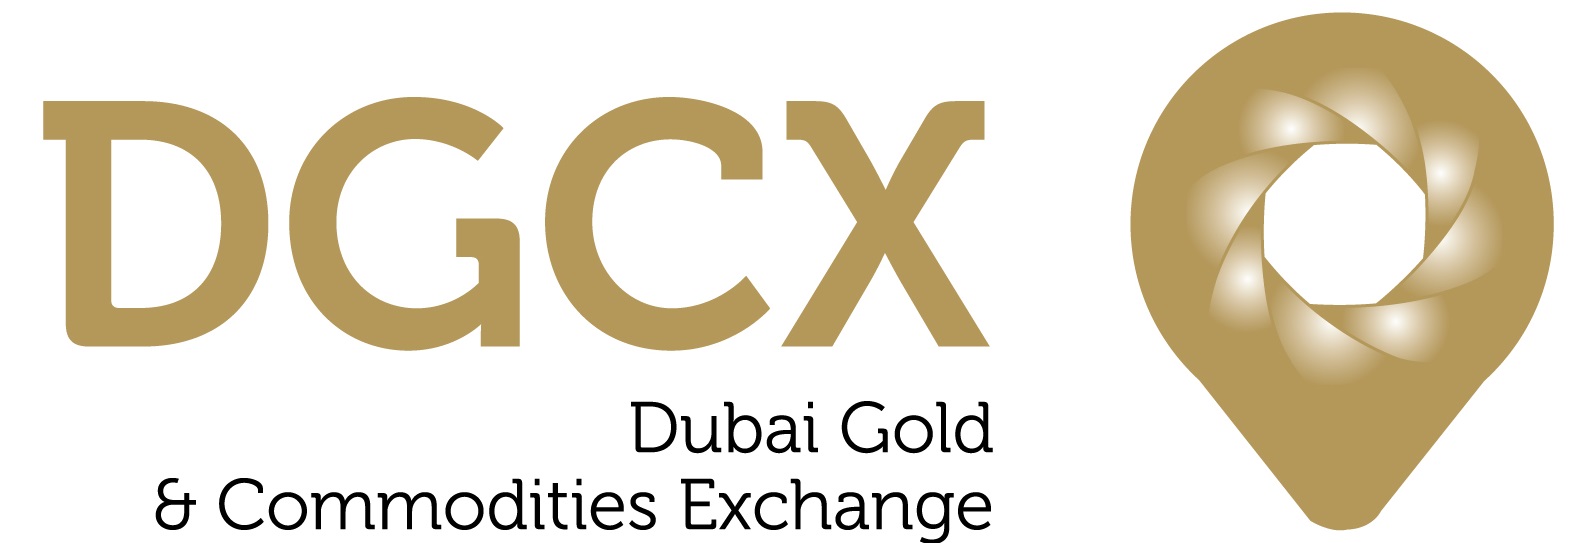 dubai_gold__commodities_exchange_logo